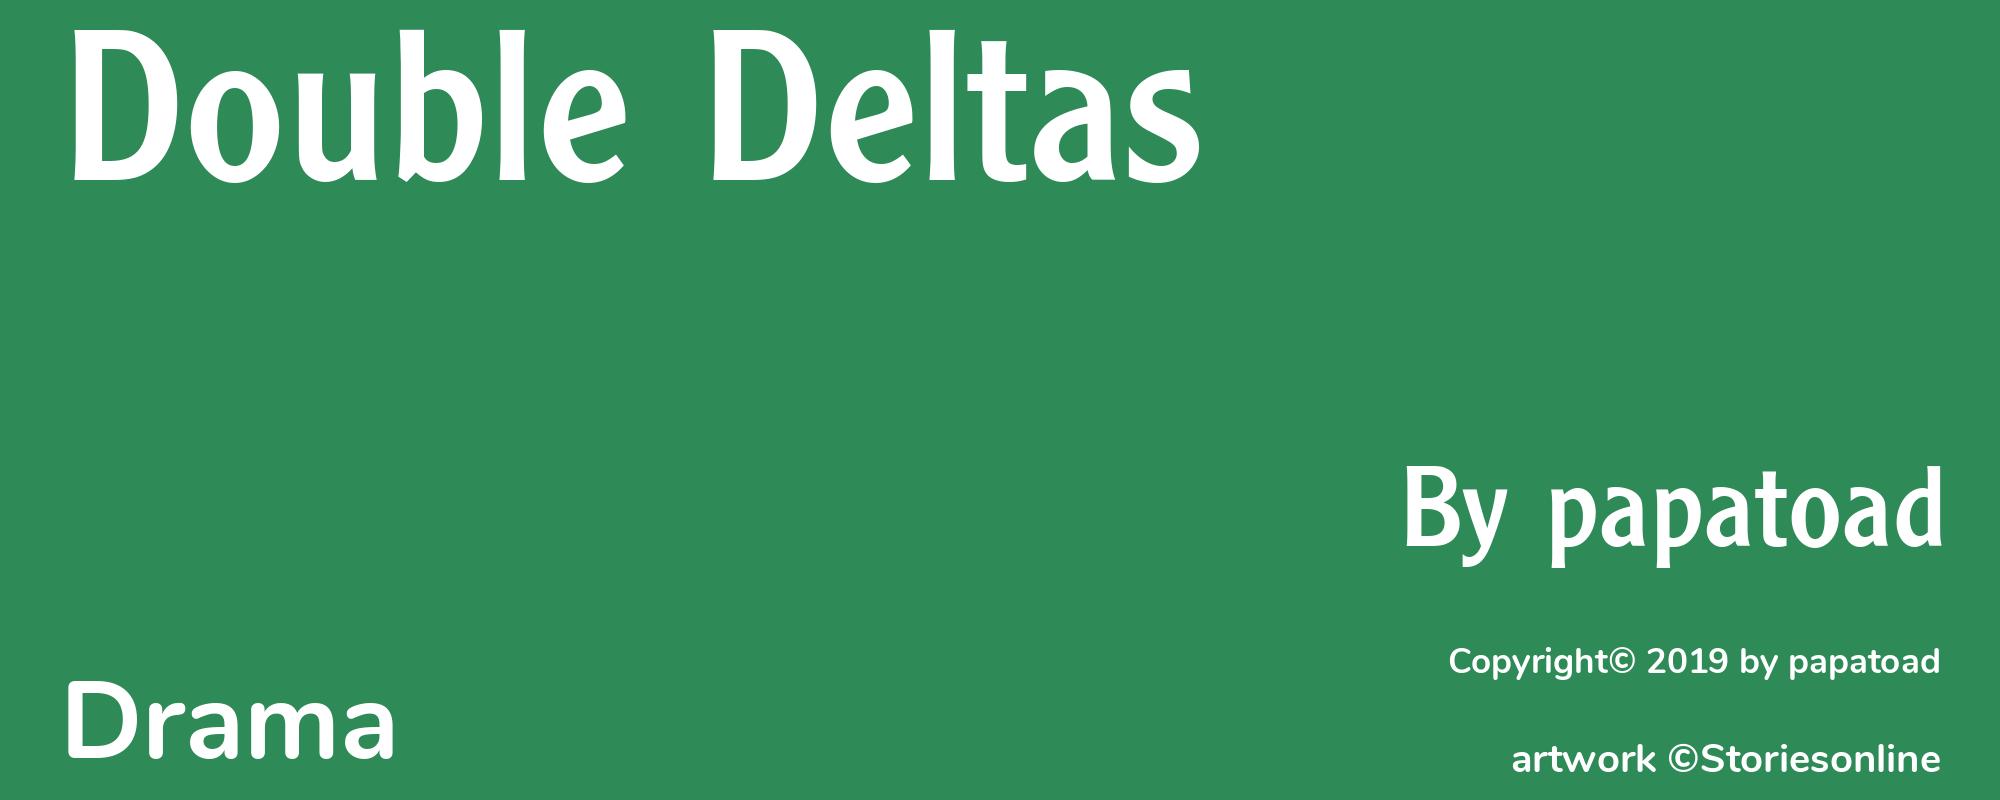 Double Deltas - Cover